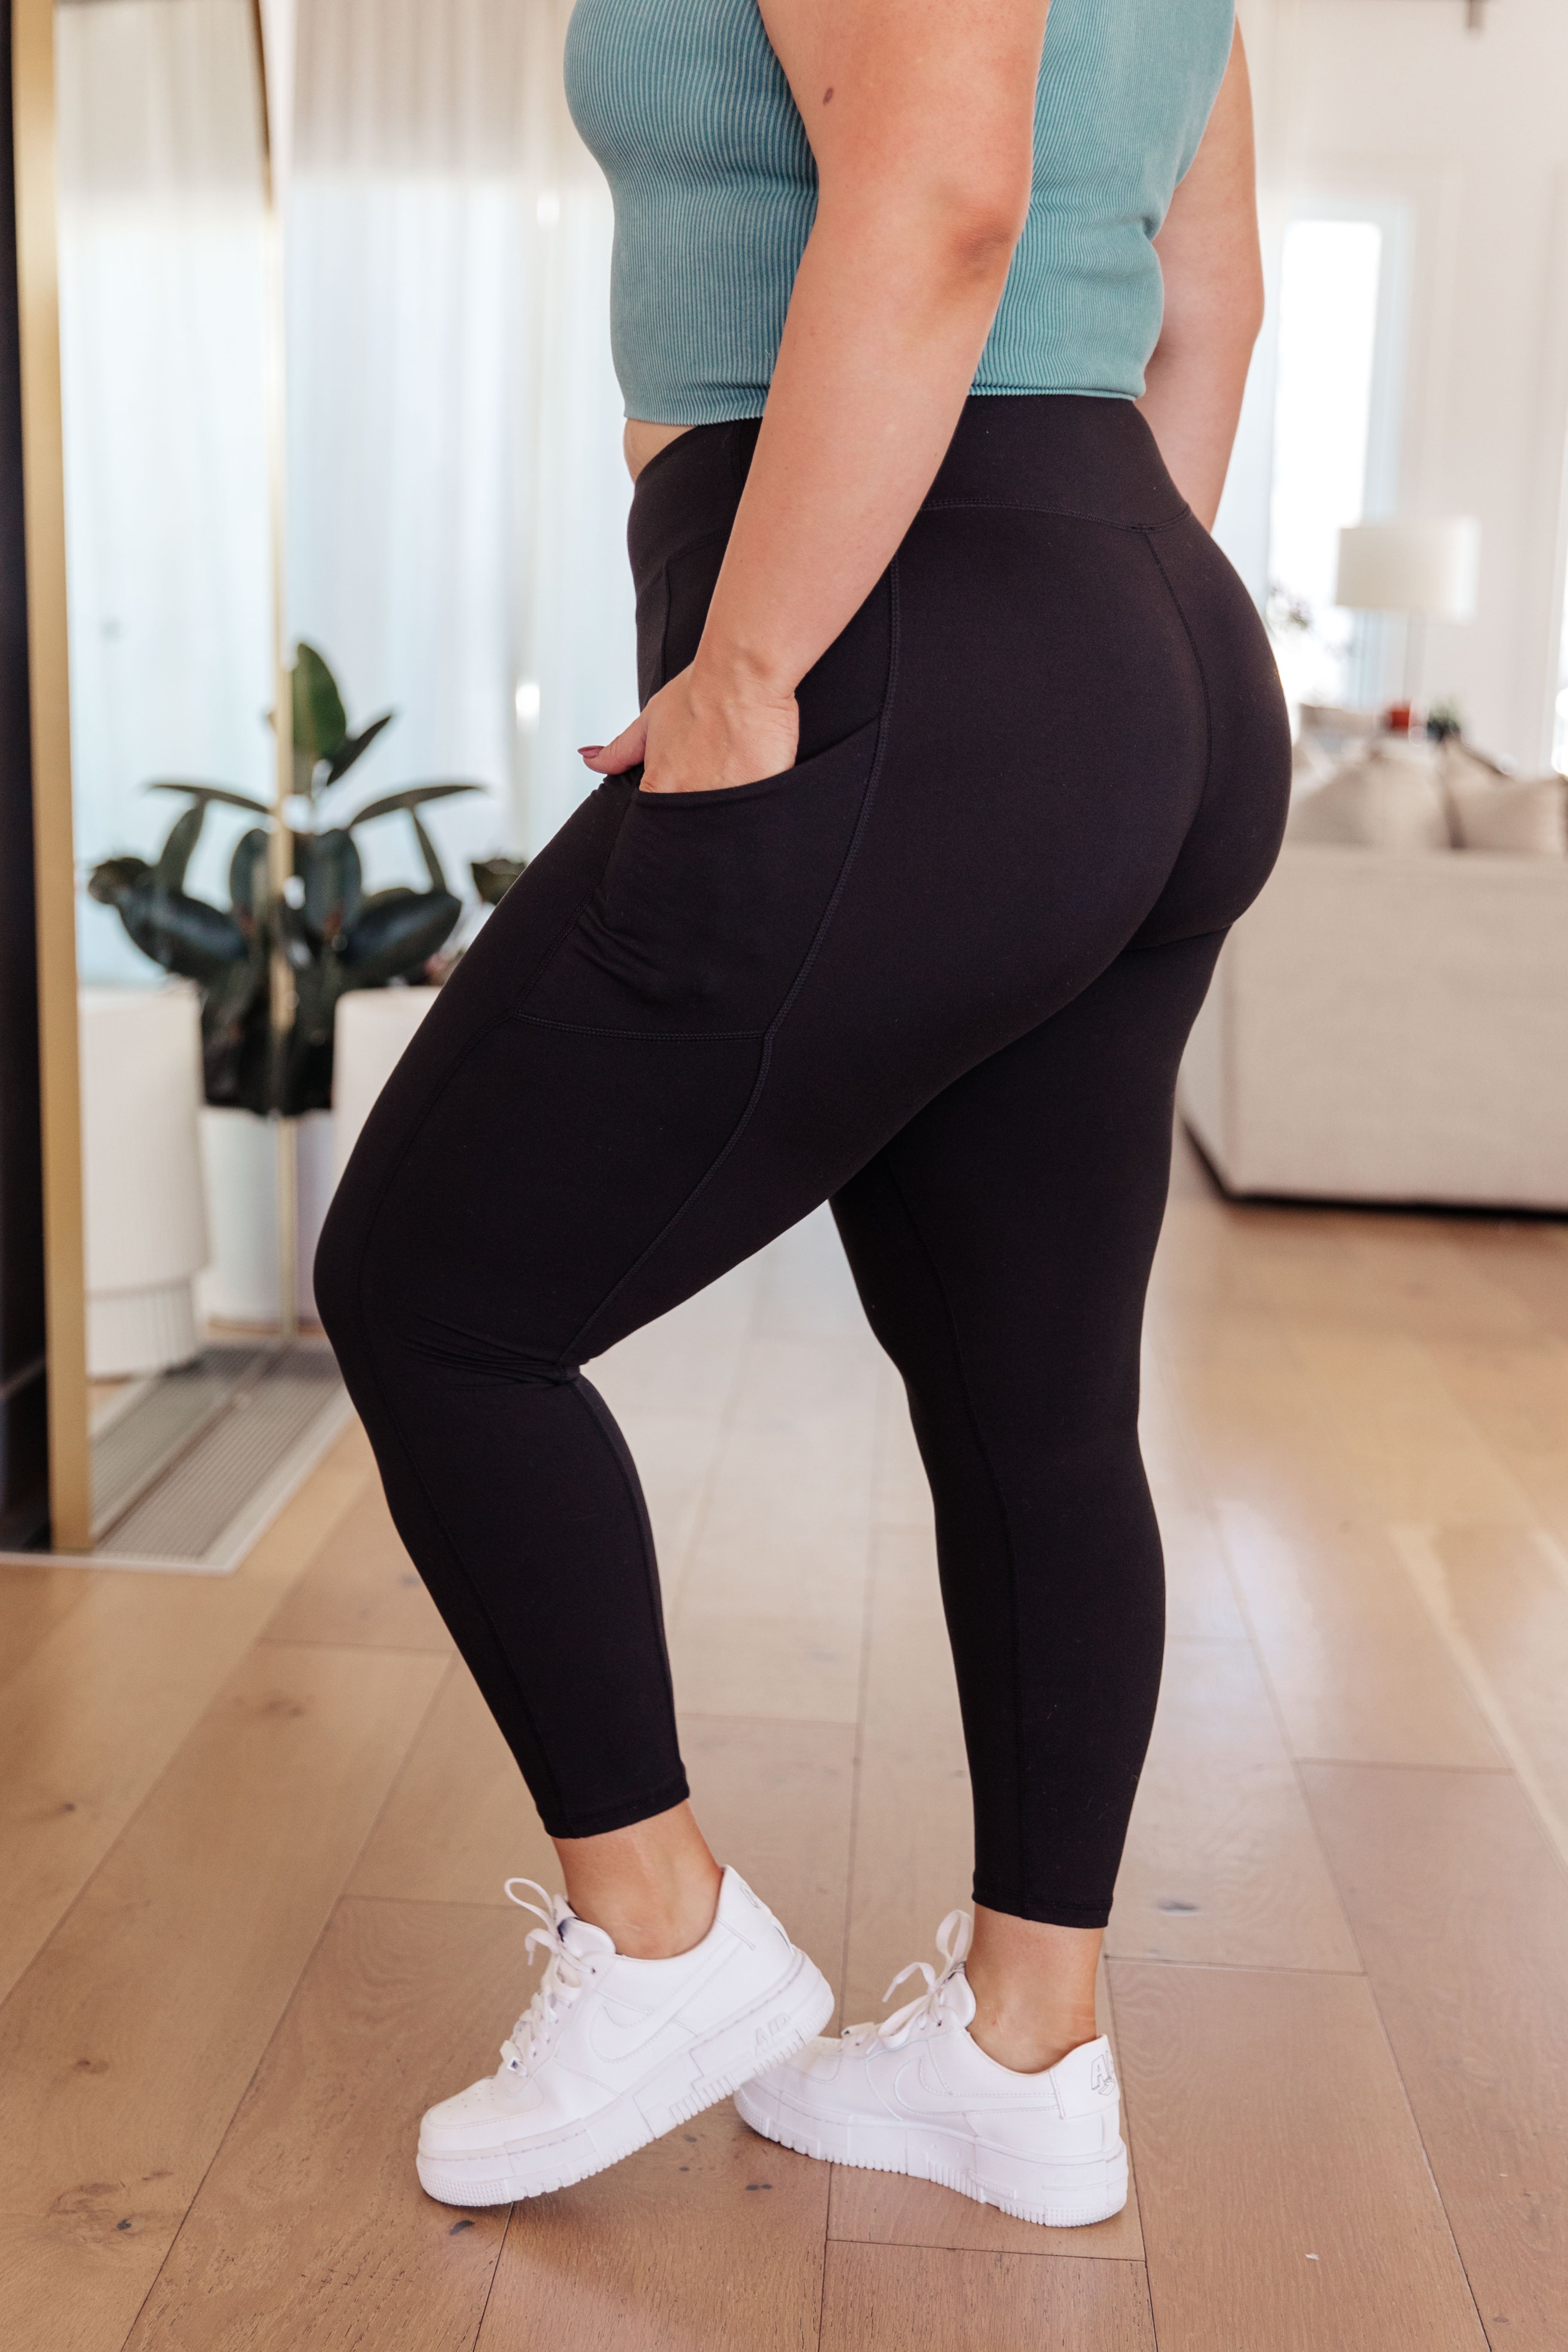 Butter Leggings Women's Athleisure Yoga Pants w Pockets Size S-3X